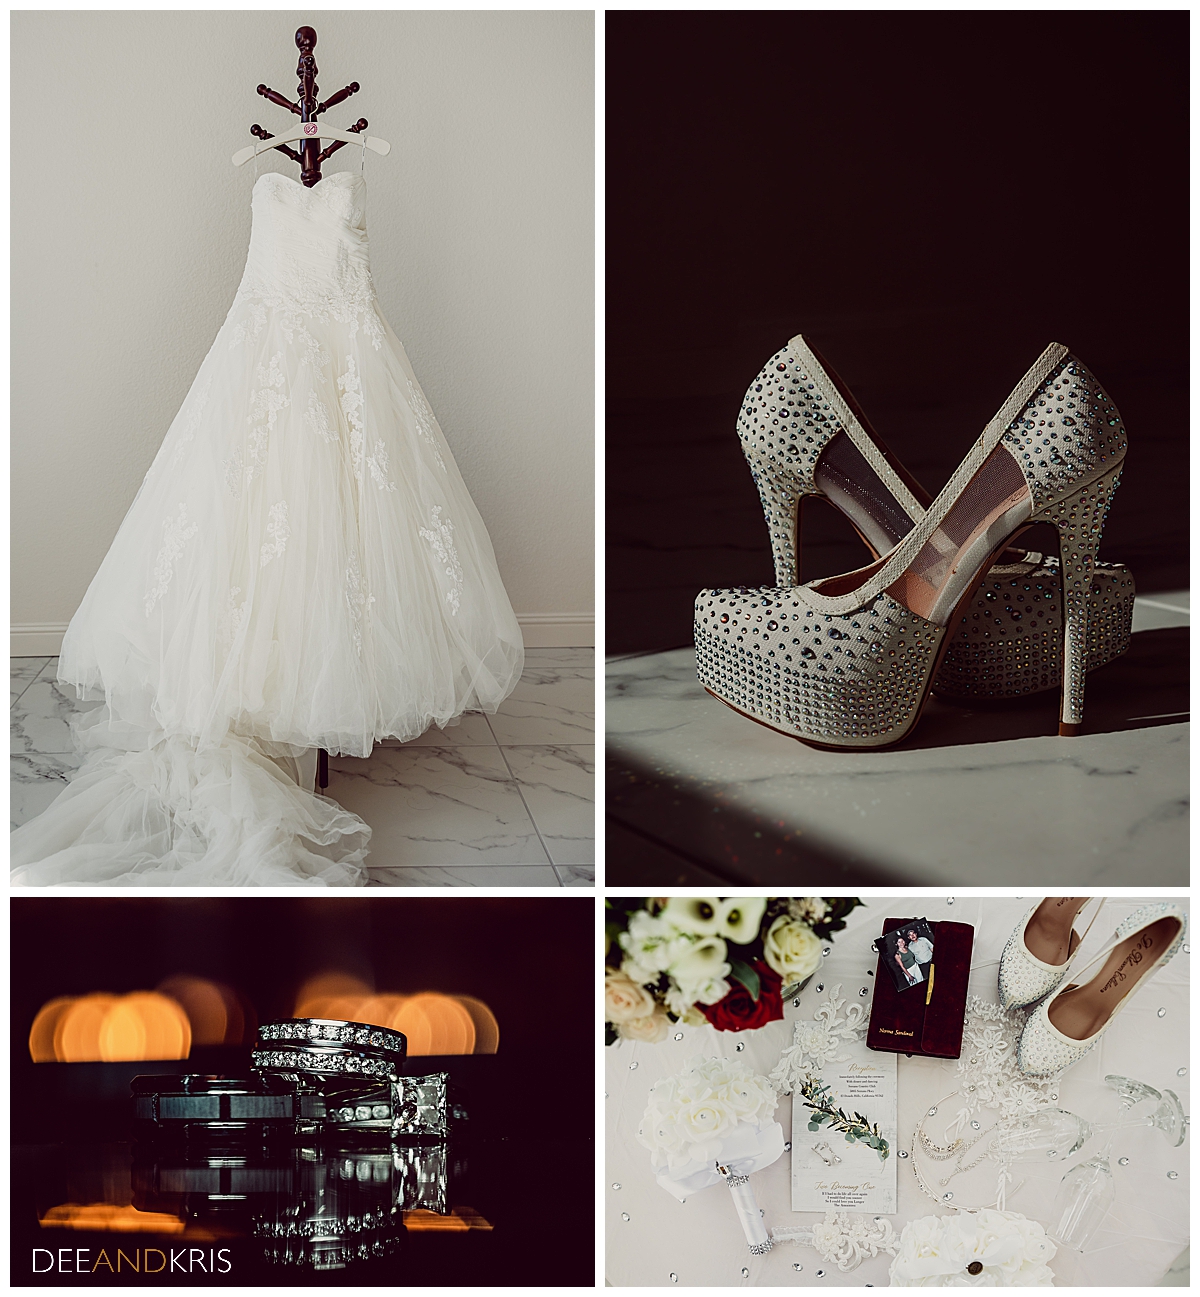 Four images: top left image of dress hanging from coat rack. top right image of bejeweled platform stiletto heels. Bottom left image of of bridal details.